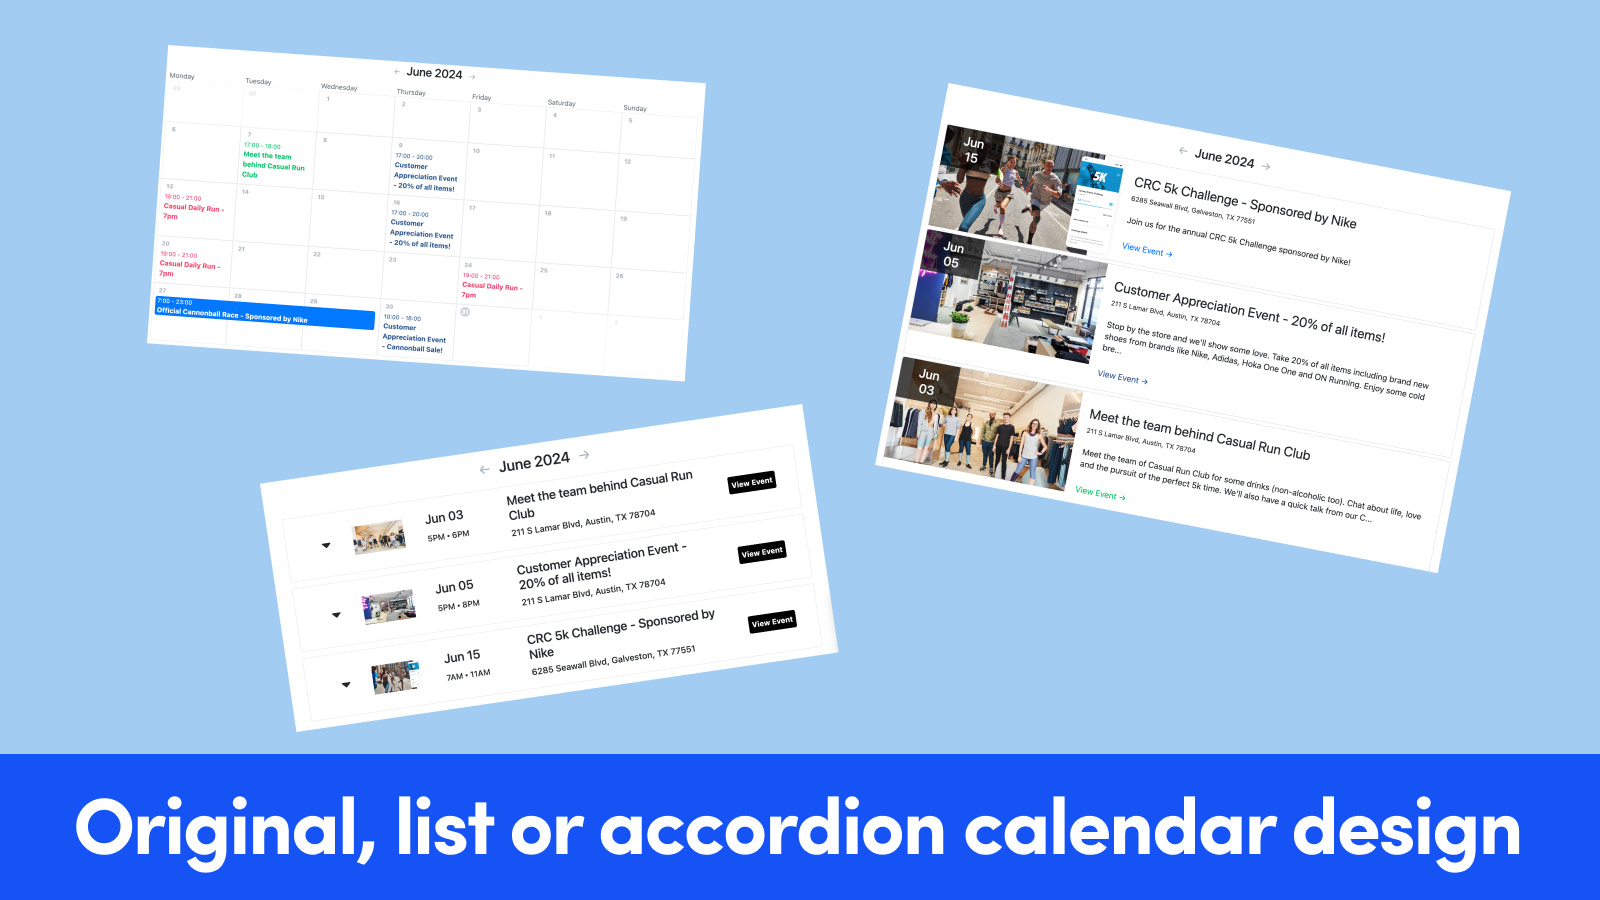 Original, list or accordion calendar design options